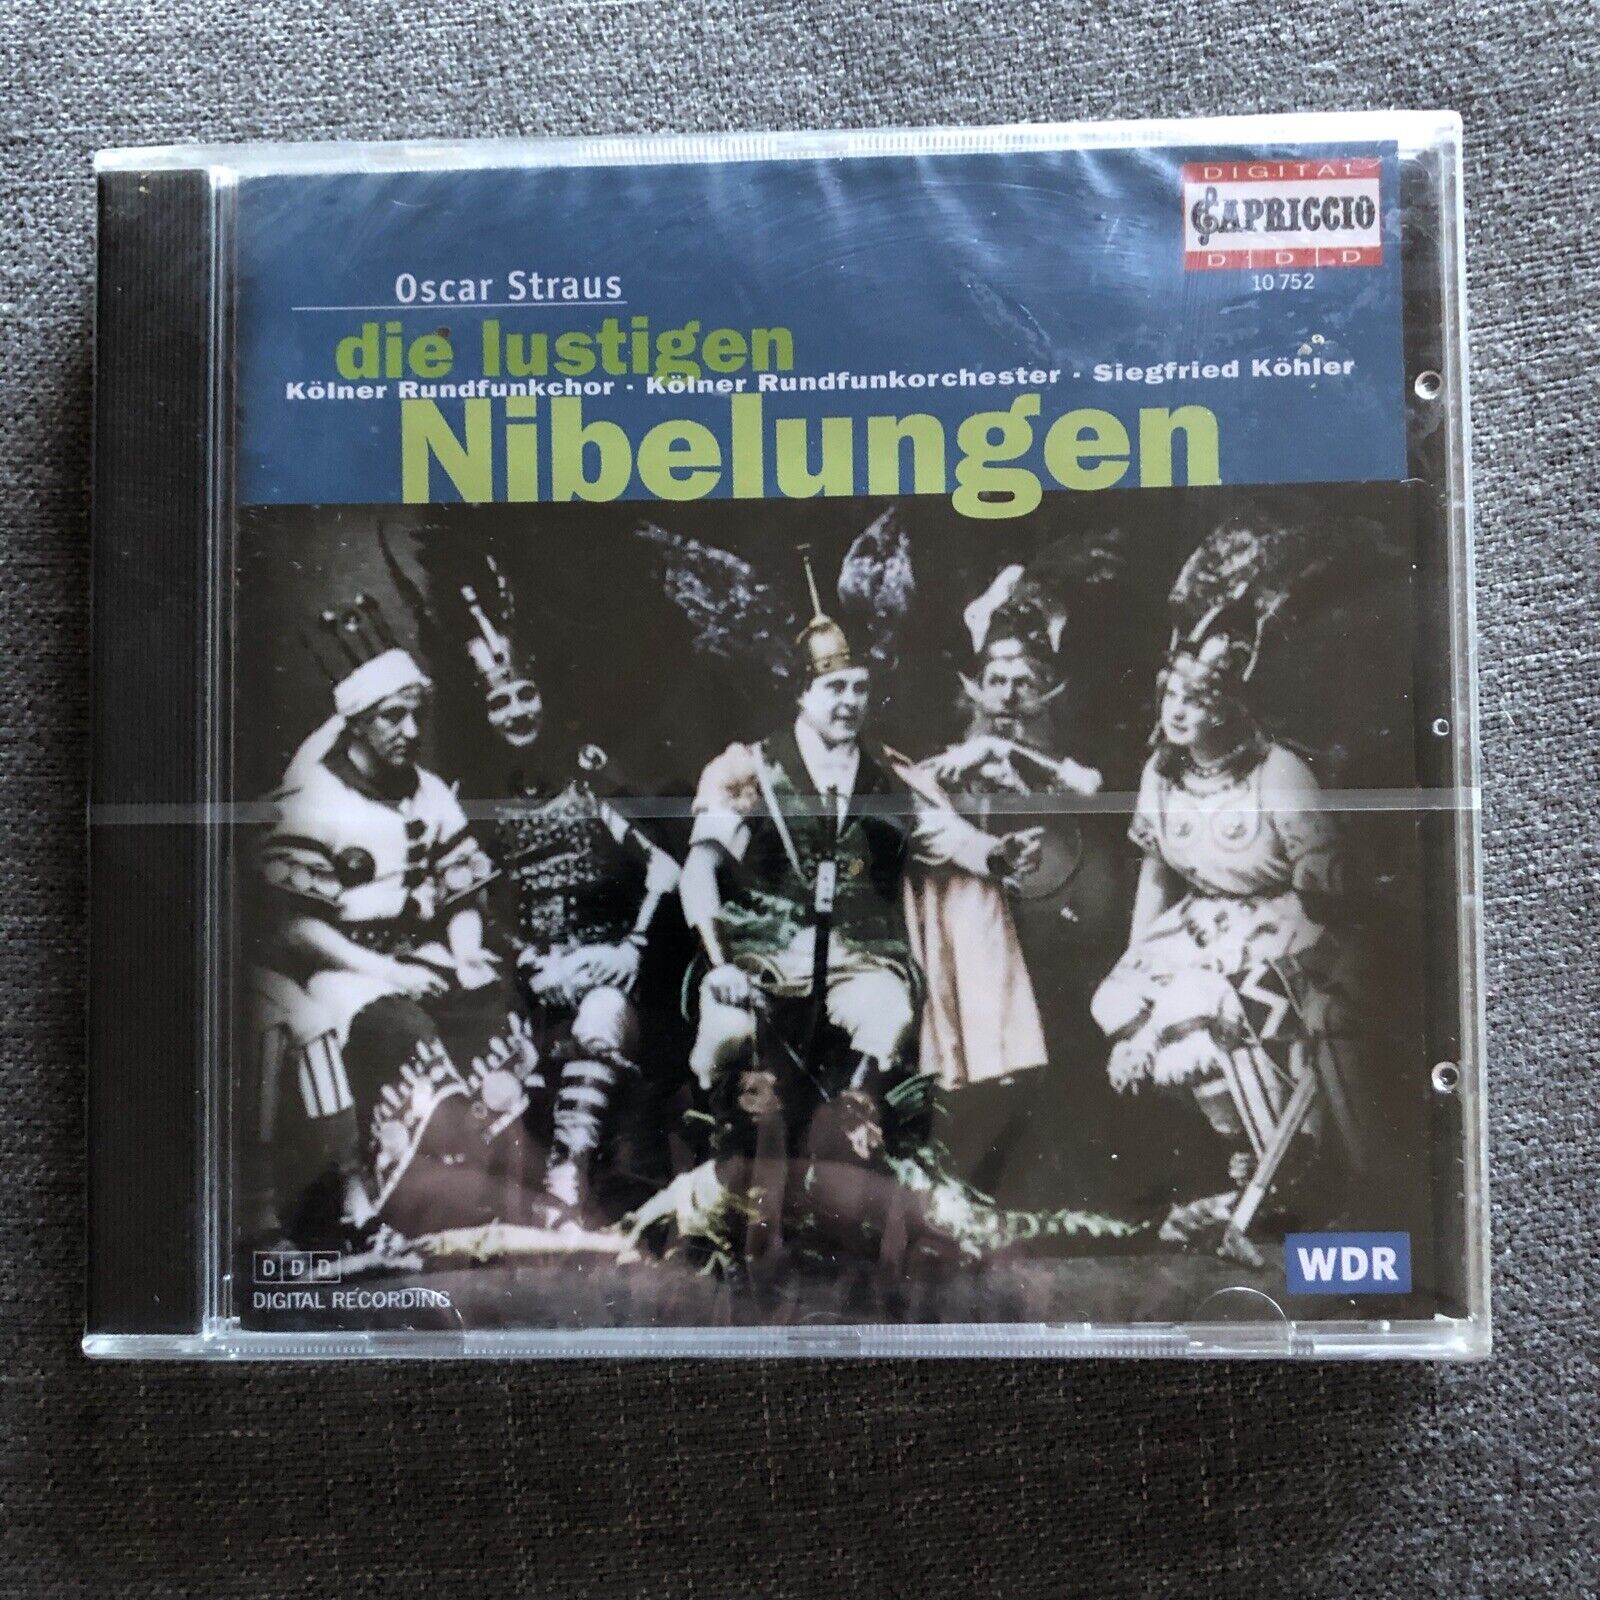 OSCAR STRAUS - Die Lustigen Nibelungen - CD New (Capriccio).     R